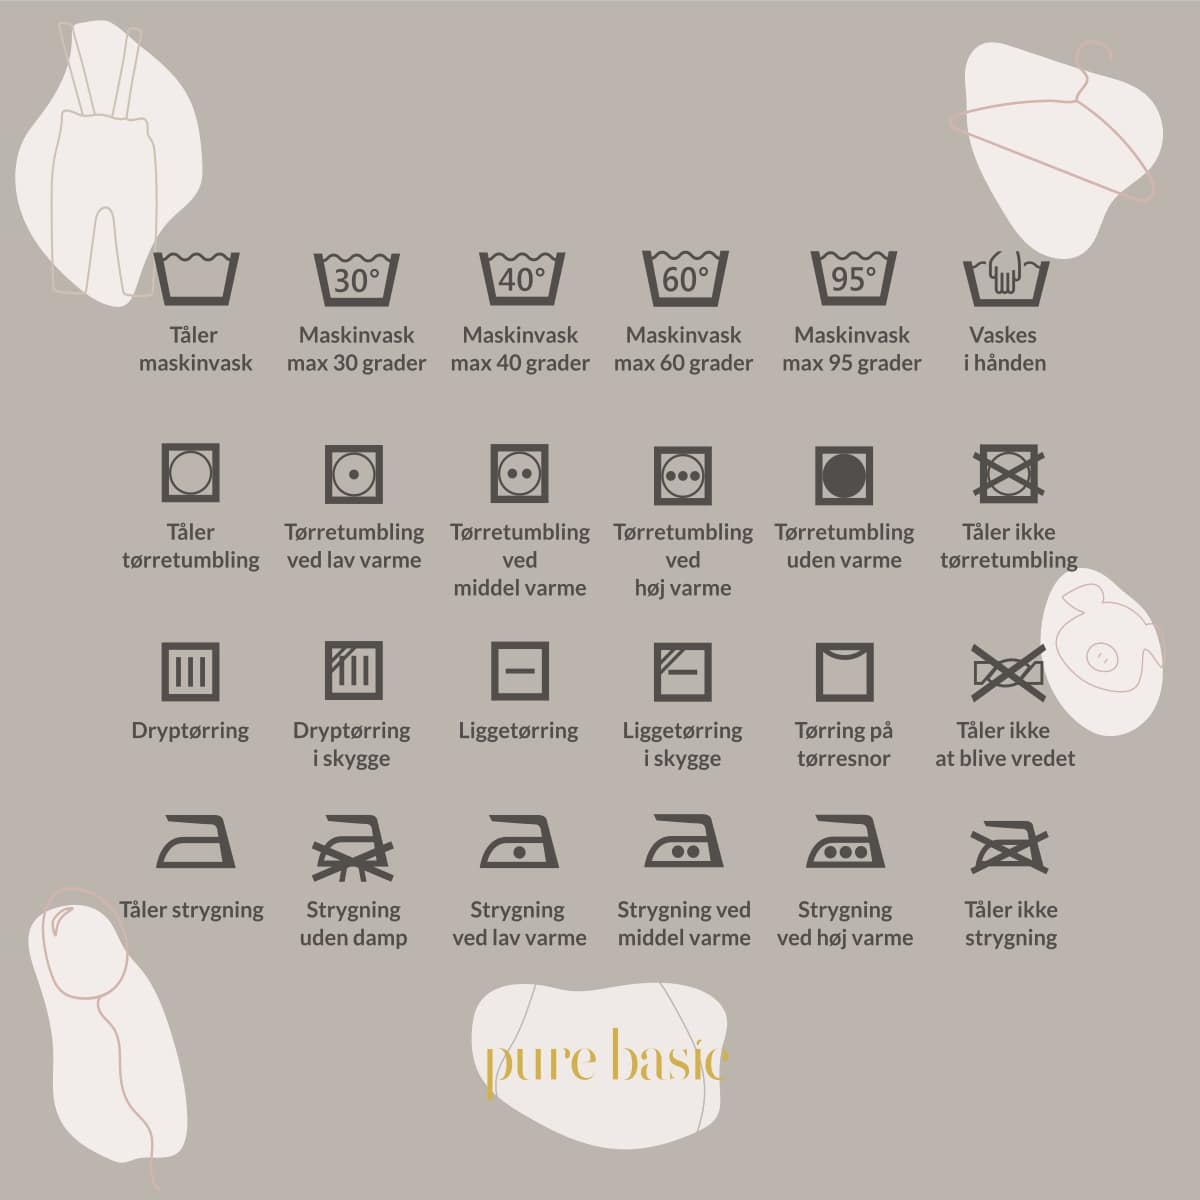 vaskeanvisninger vaskesymboler vasketøj symboler